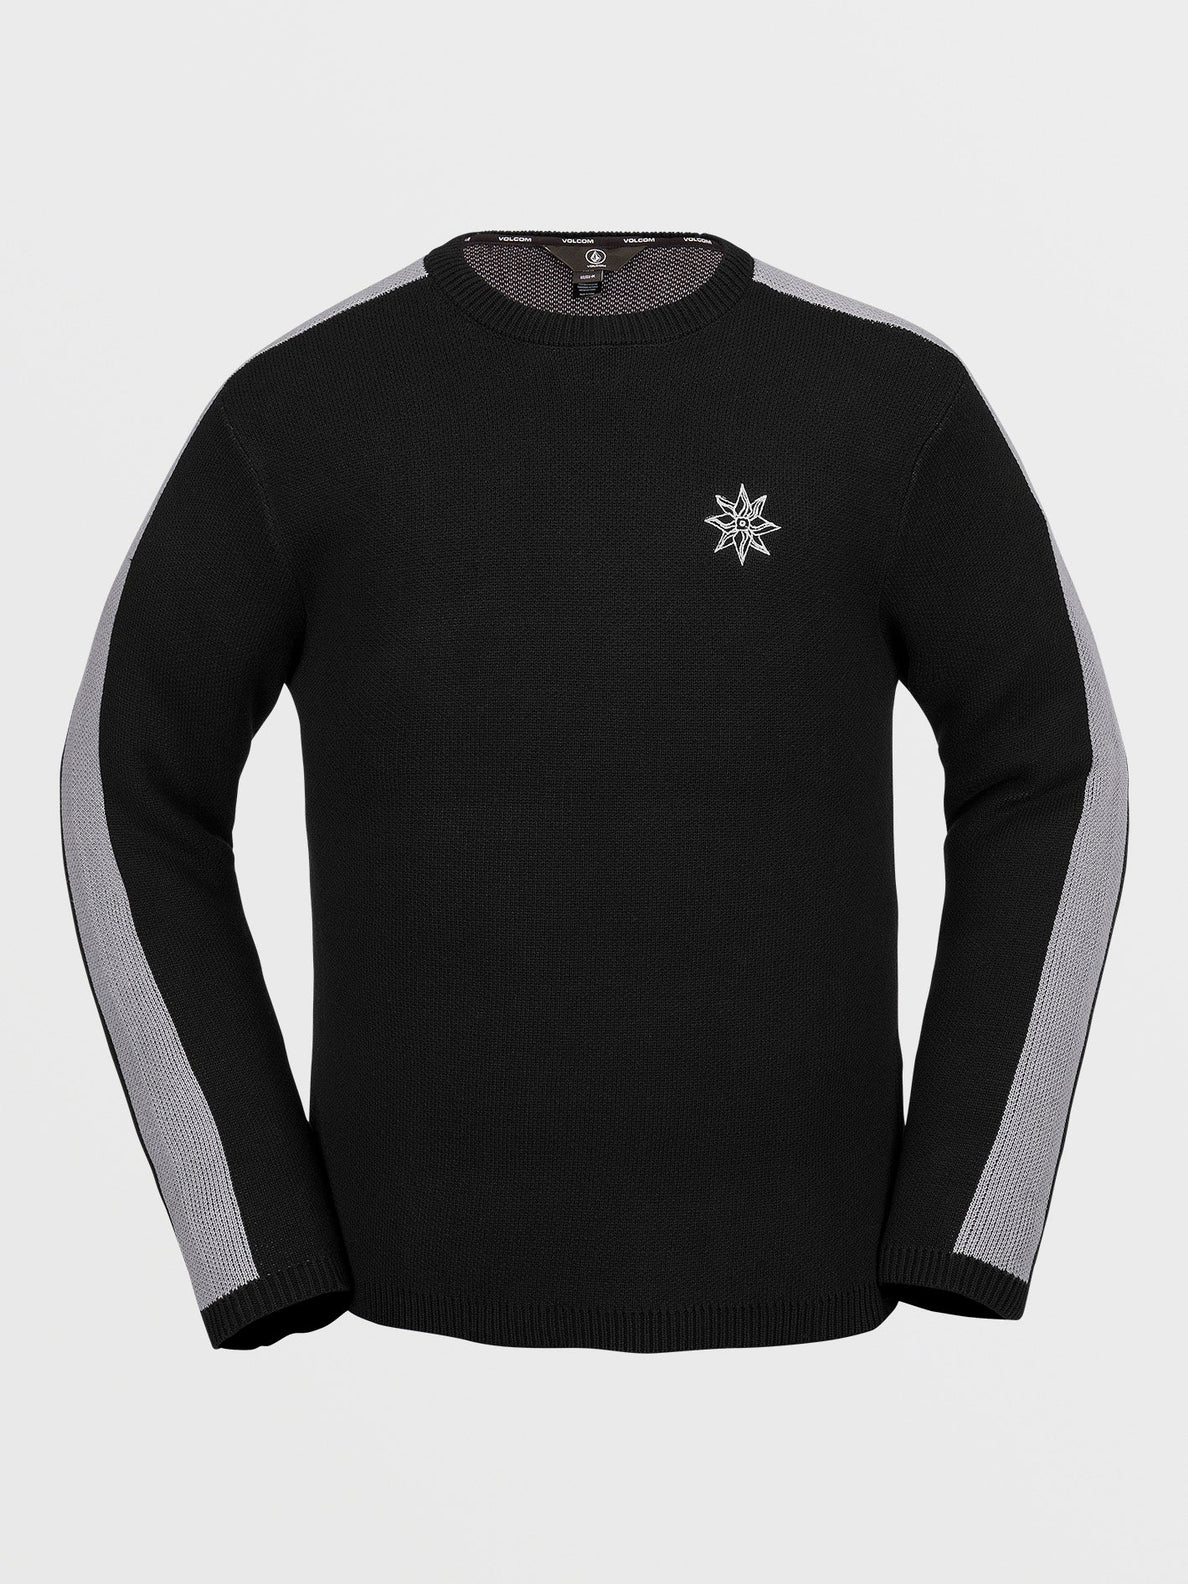 Ravelson Sweater - BLACK (G0752401_BLK) [F]